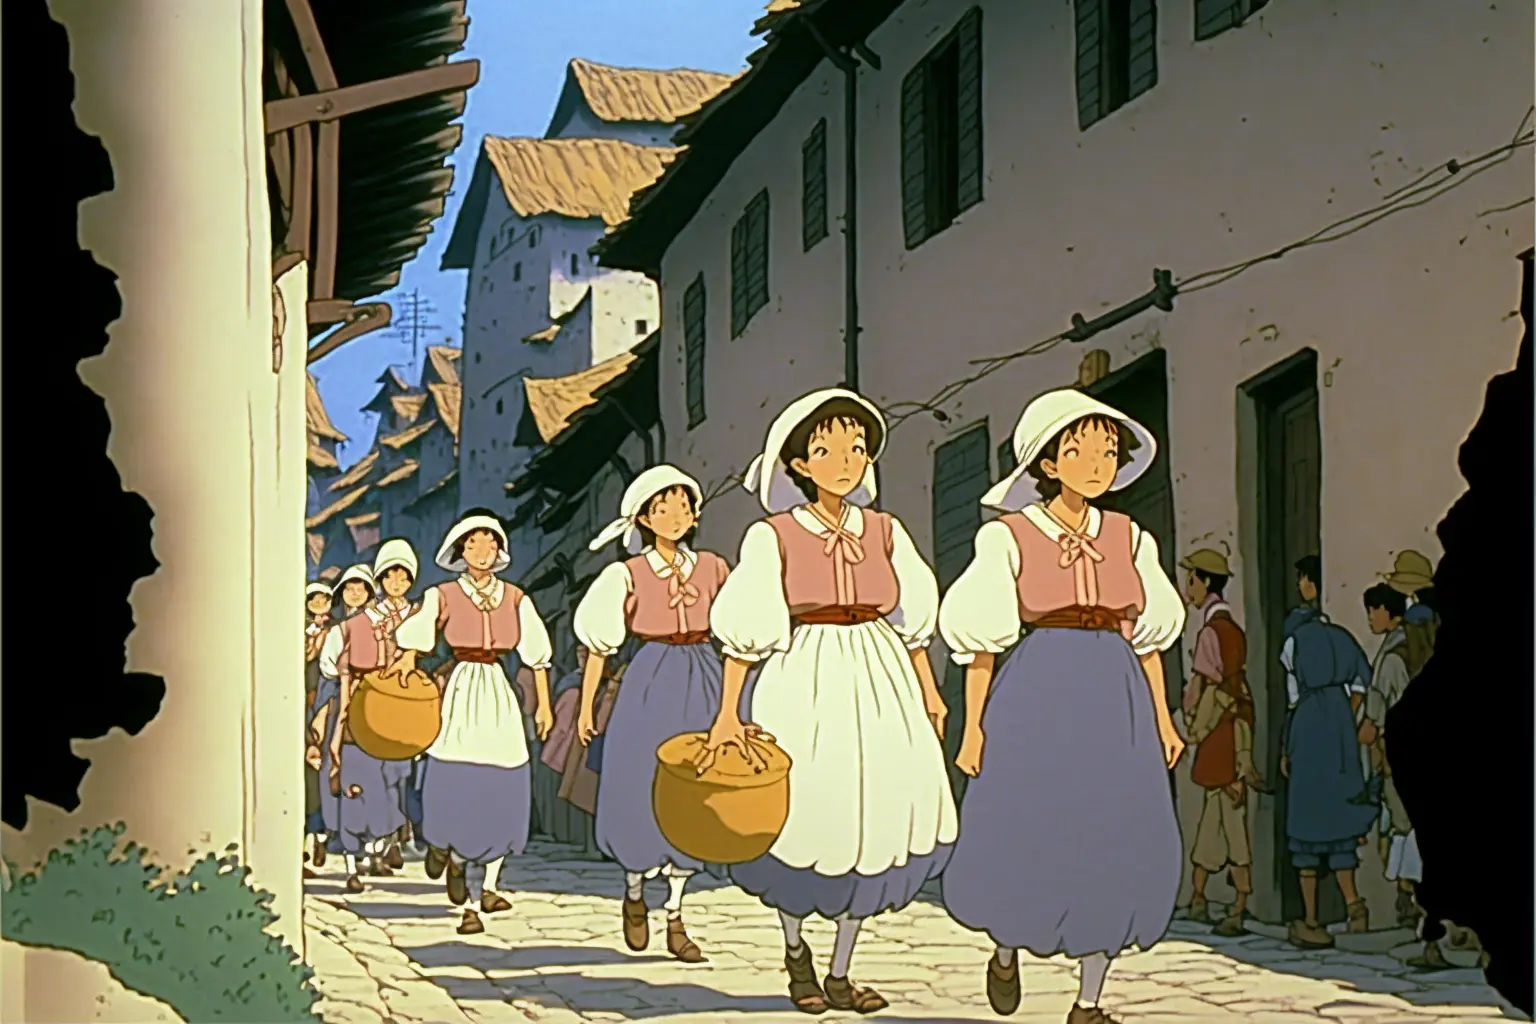 DVD screengrab from studio ghibli movie, rebel peasants in a village panicking, directed by Hayao Miyazaki, retro anime